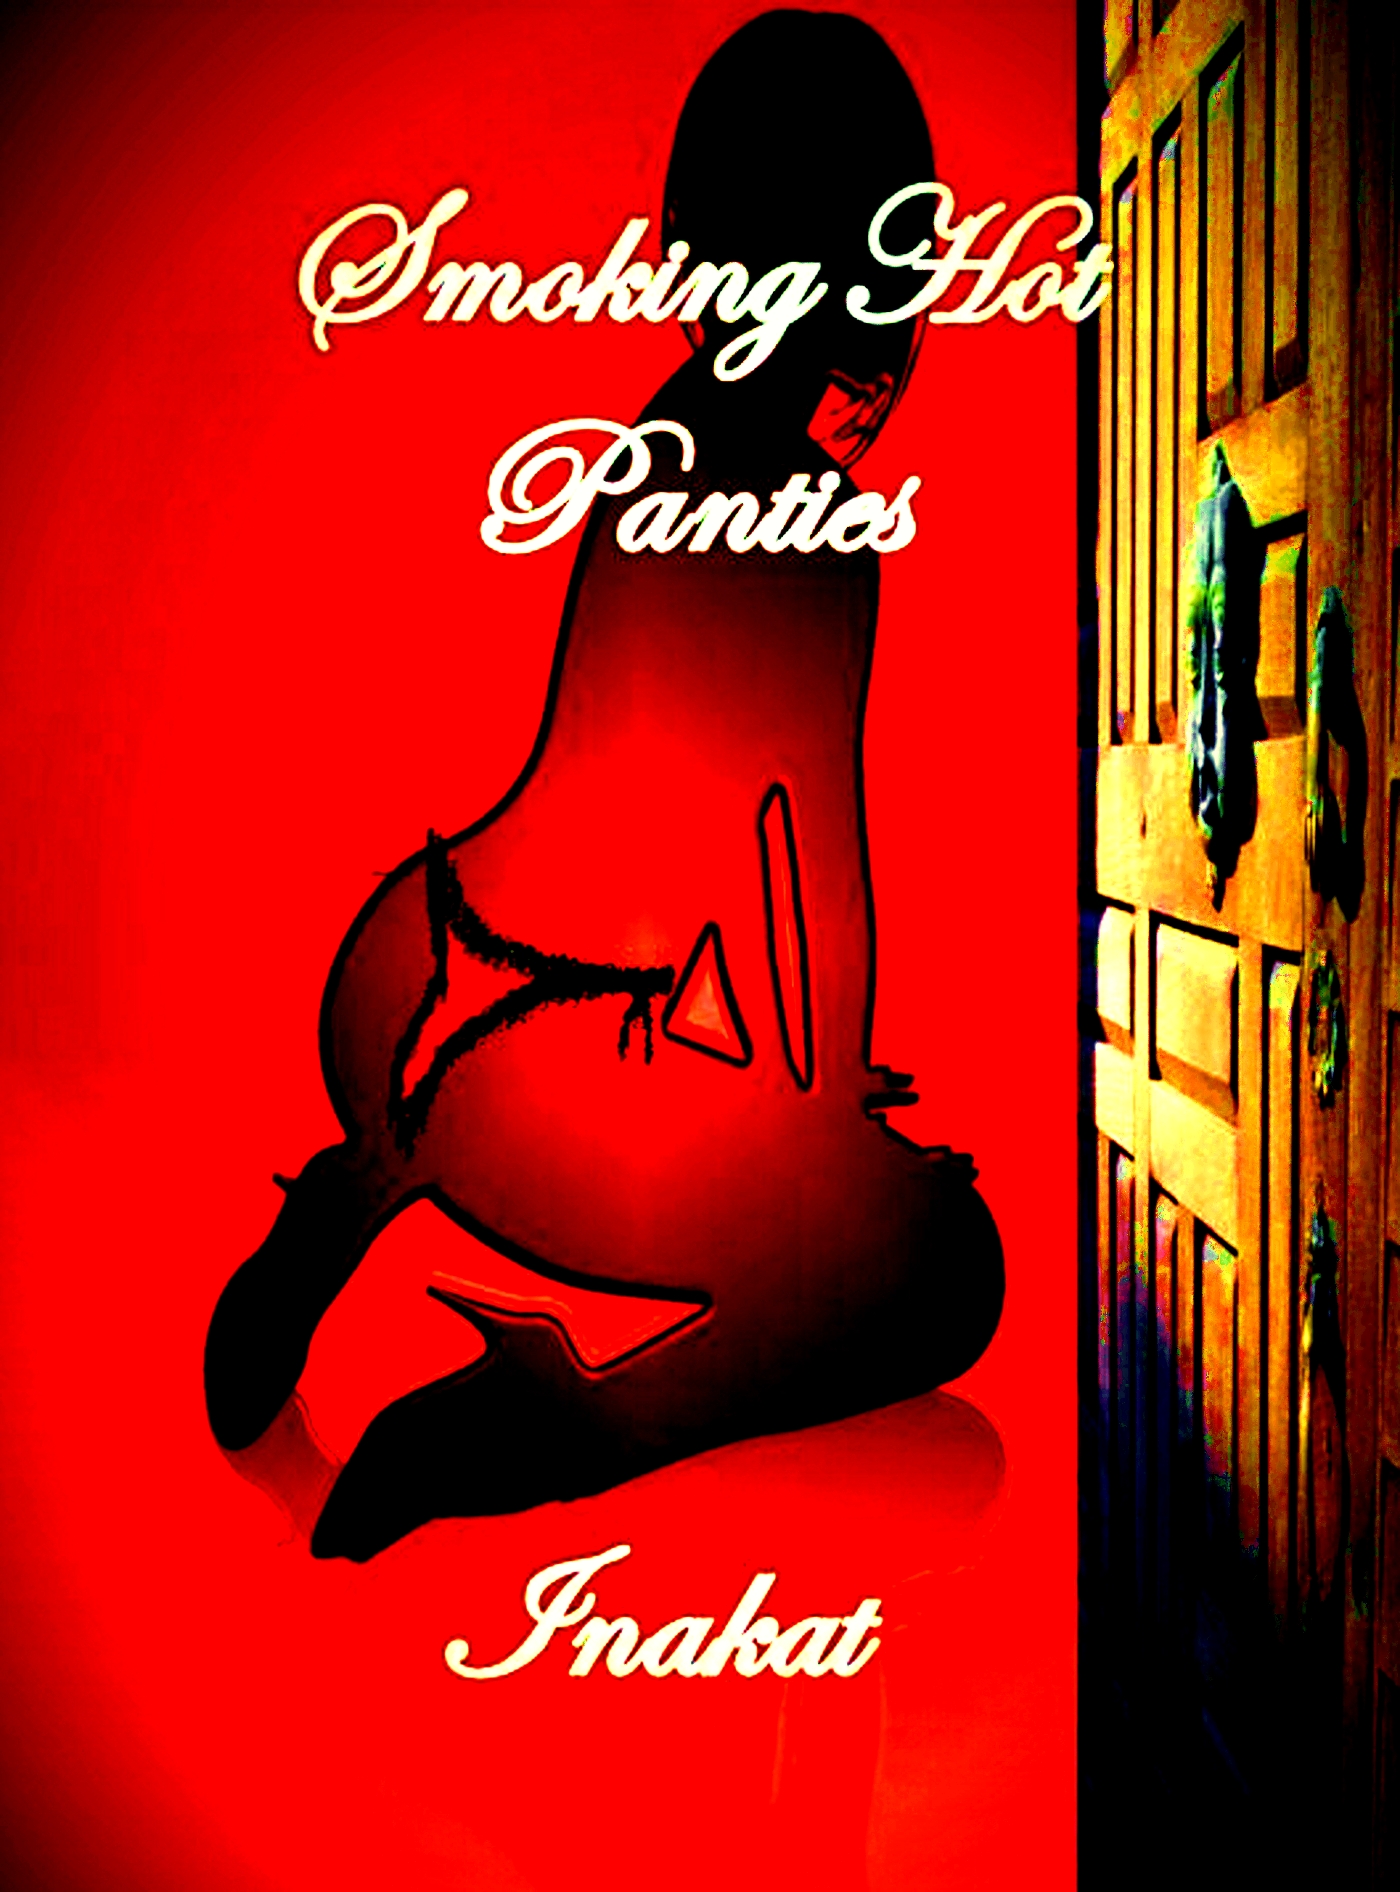 https://t.co/ifWAE1uVit :"Naughty kink with a twist!" Smoking Hot Panties 2 #Inakat #RT #LPRTG #IARTG https://t.co/BovtcxtsSE